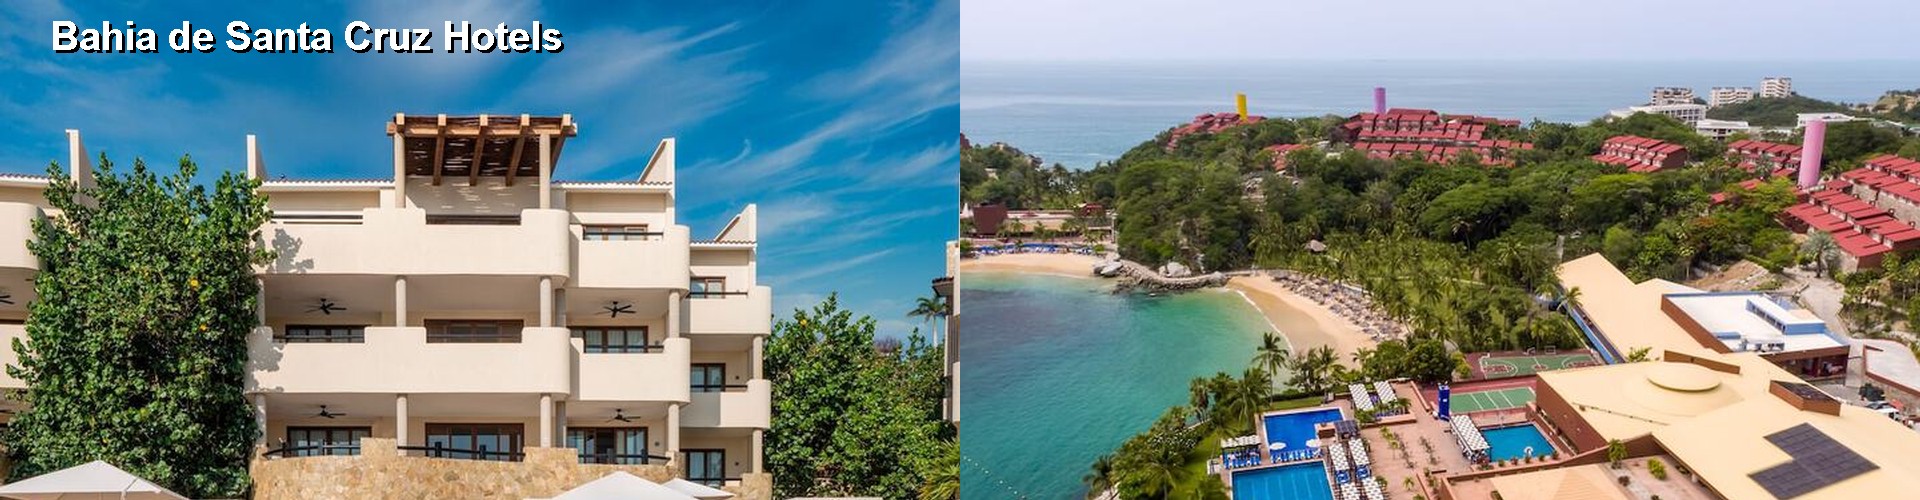 5 Best Hotels near Bahia de Santa Cruz